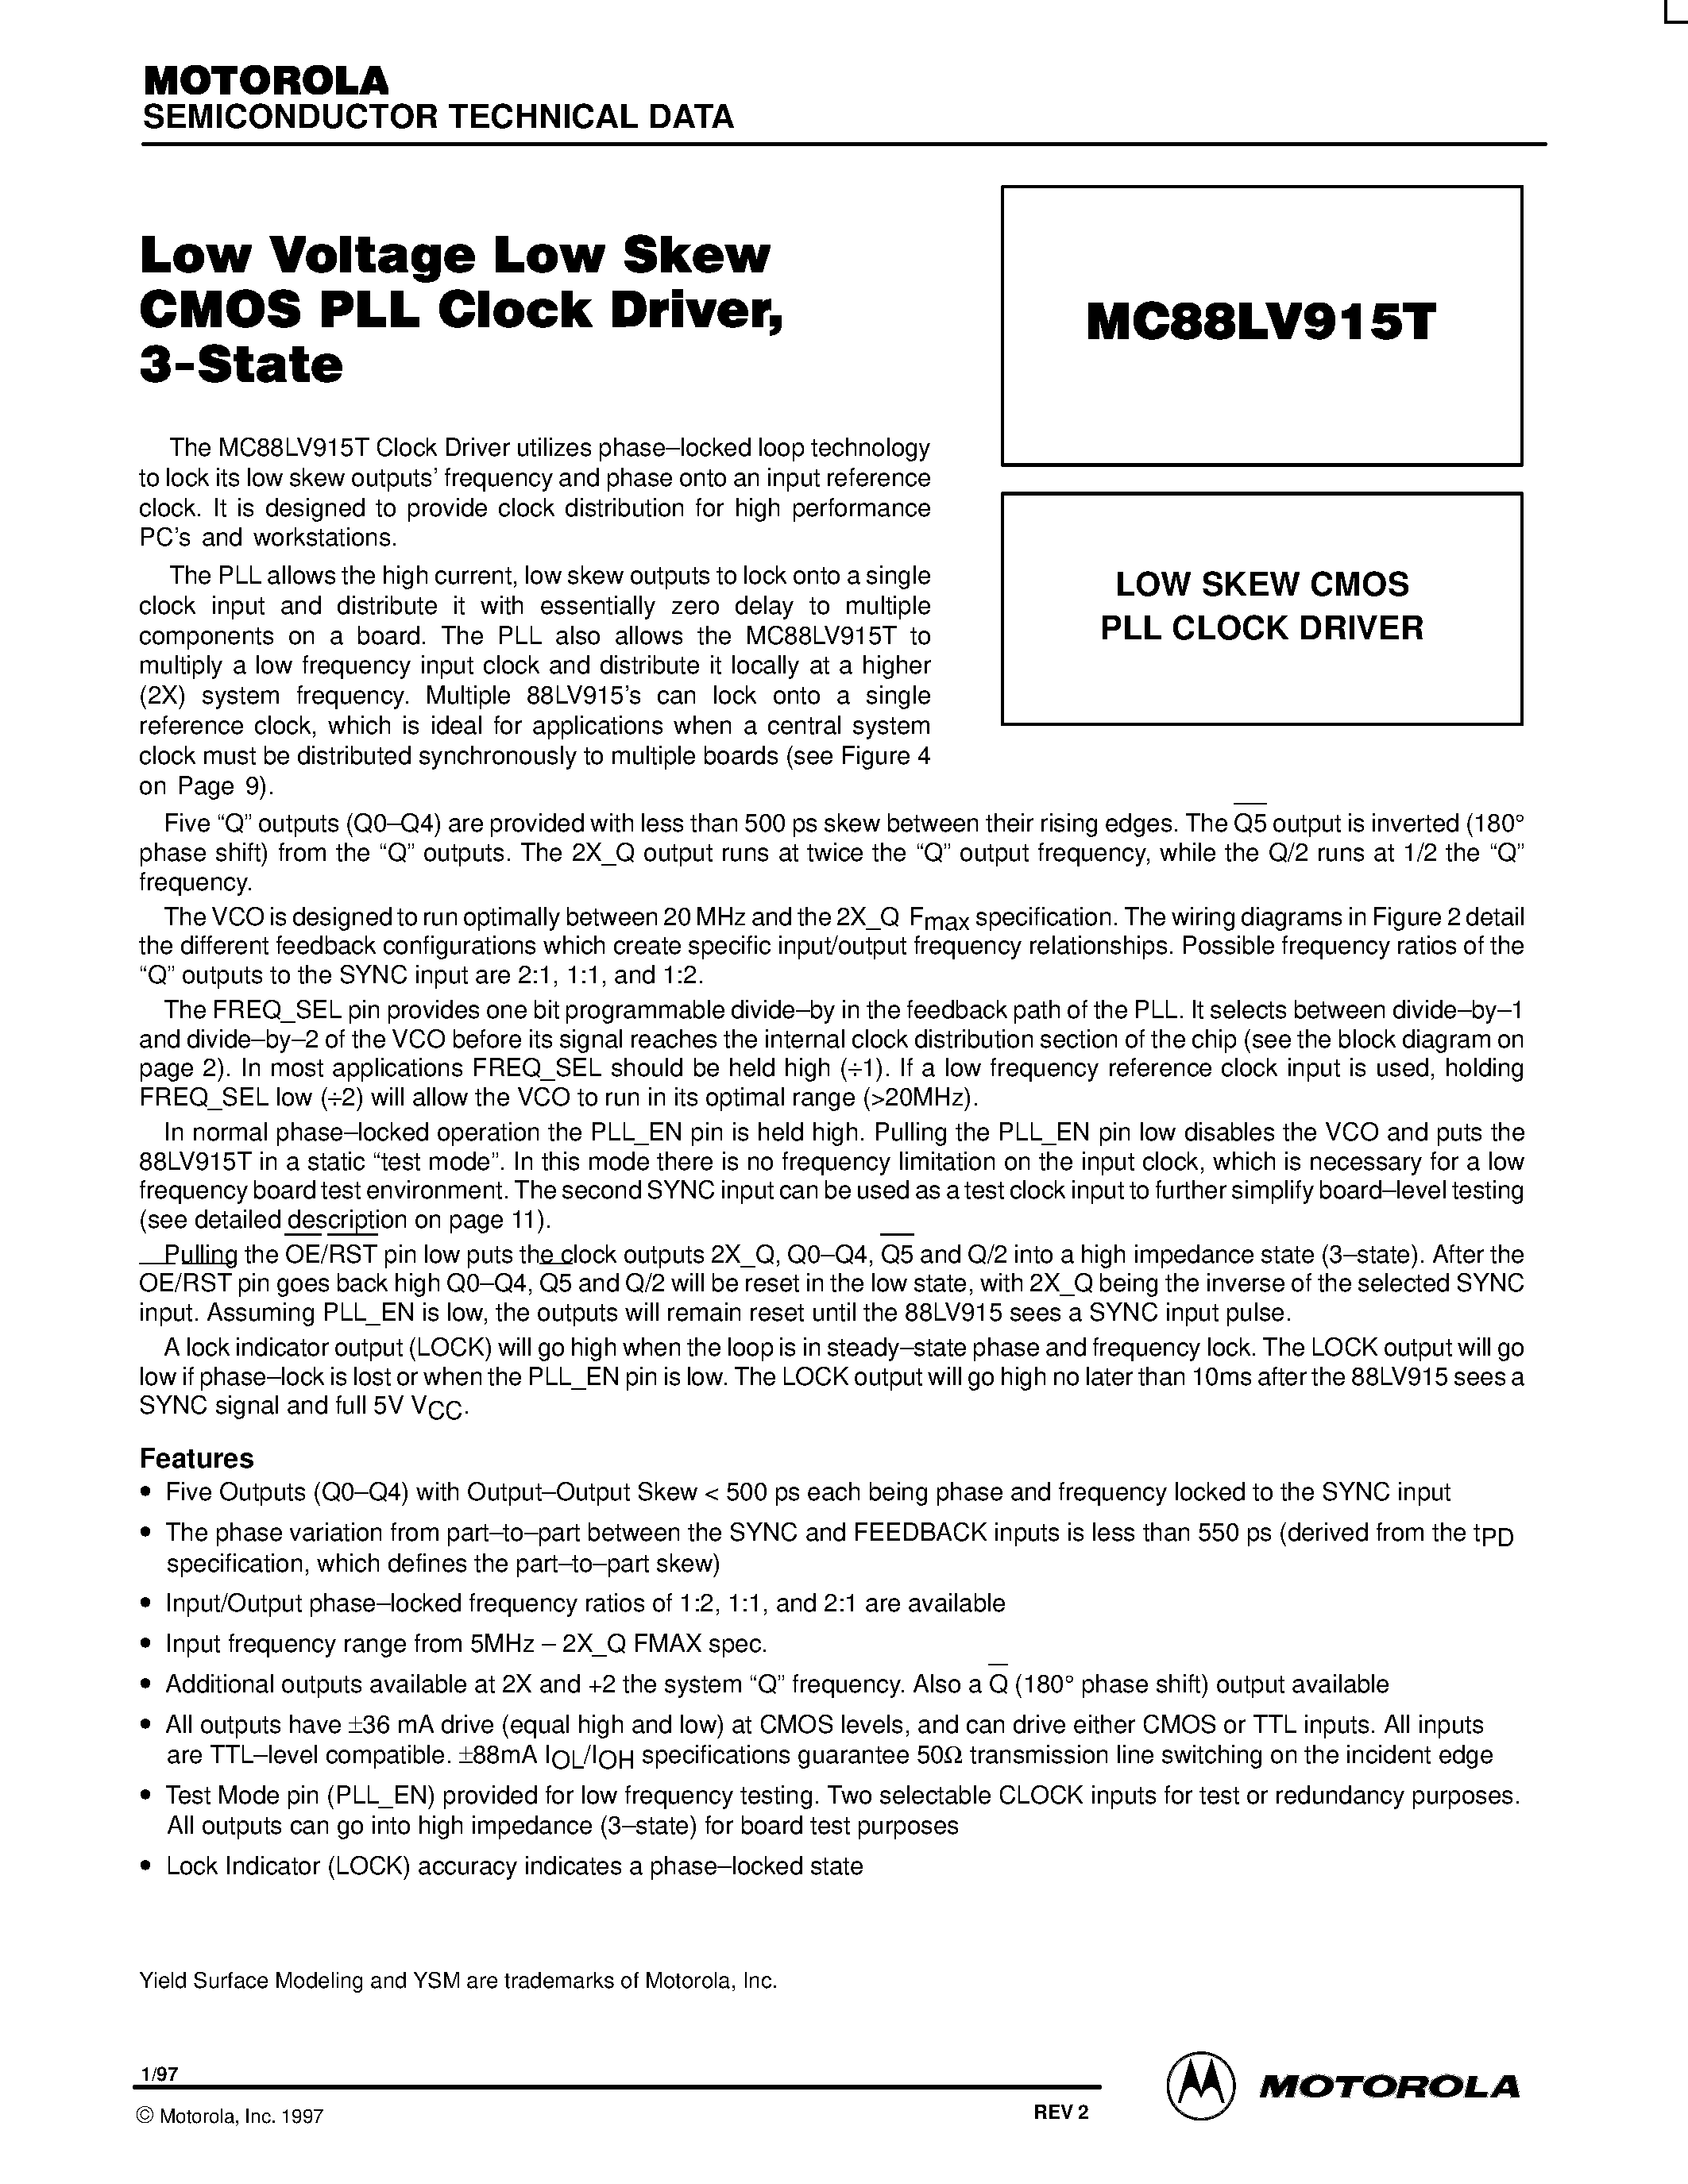 Даташит MC88LV915 - LOW SKEW CMOS PLL CLOCK DRIVER страница 1